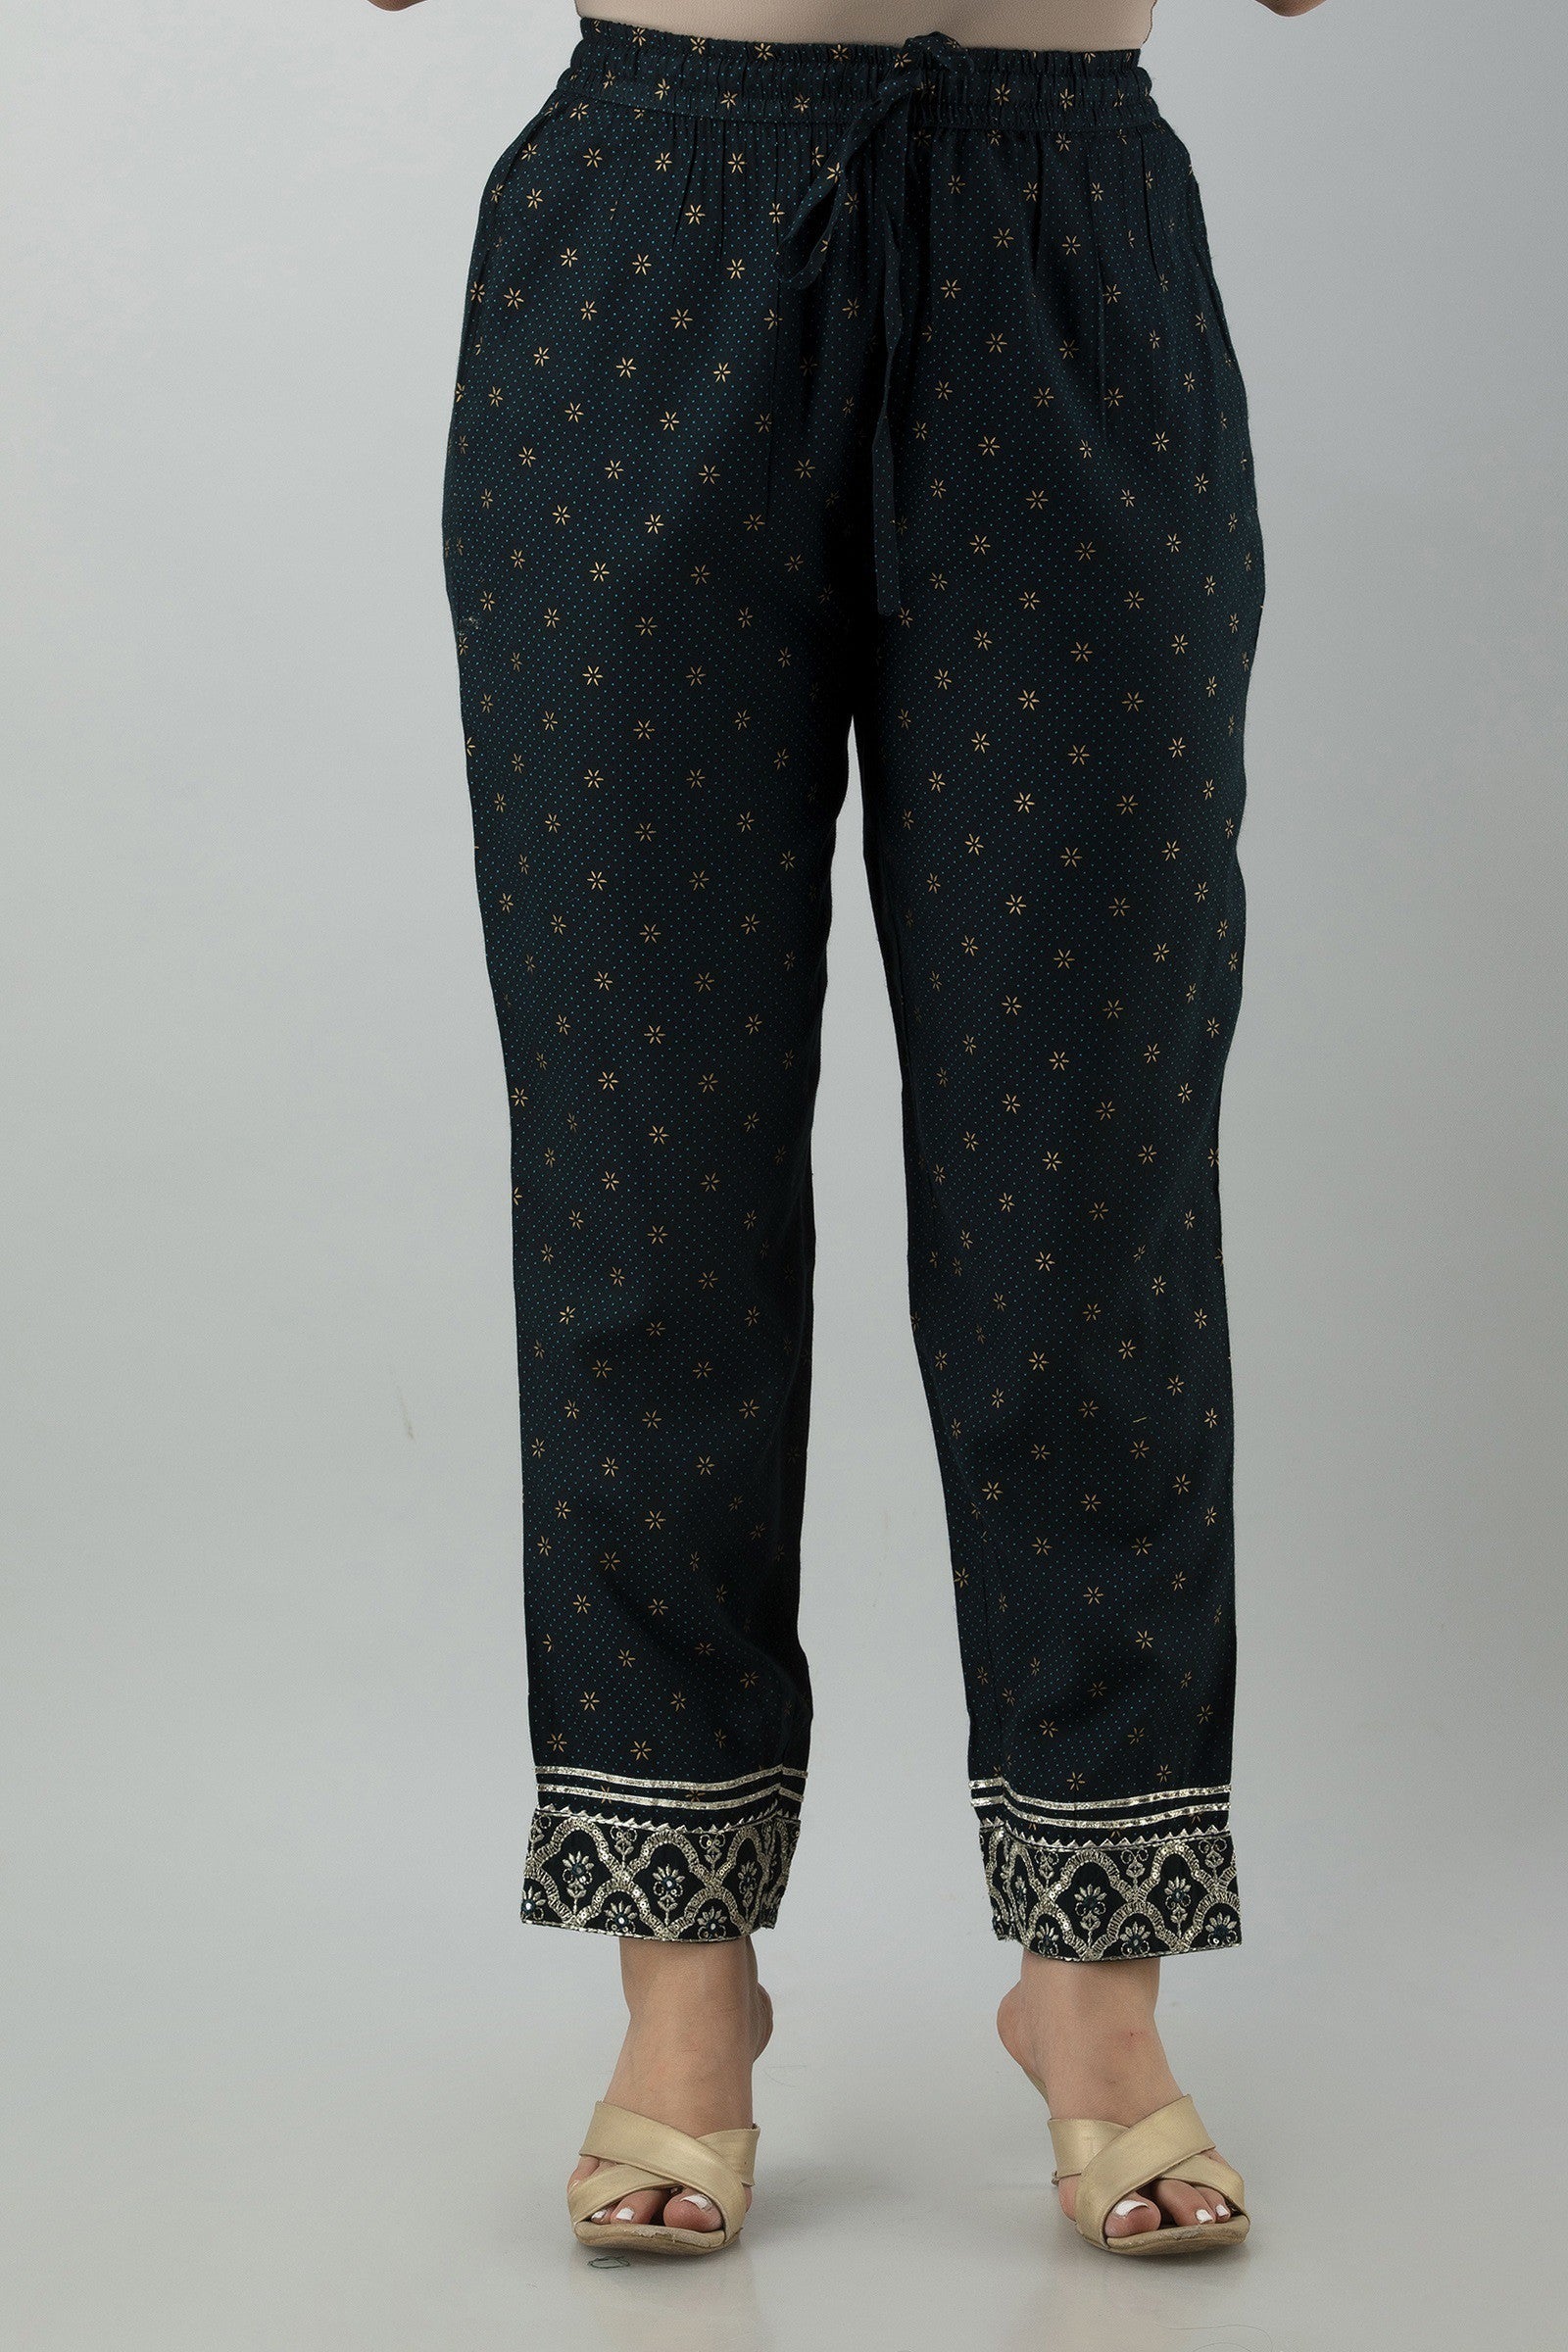 Women's Embroidered Viscose Rayon Straight Kurta Pant Set (Teal) - Charu